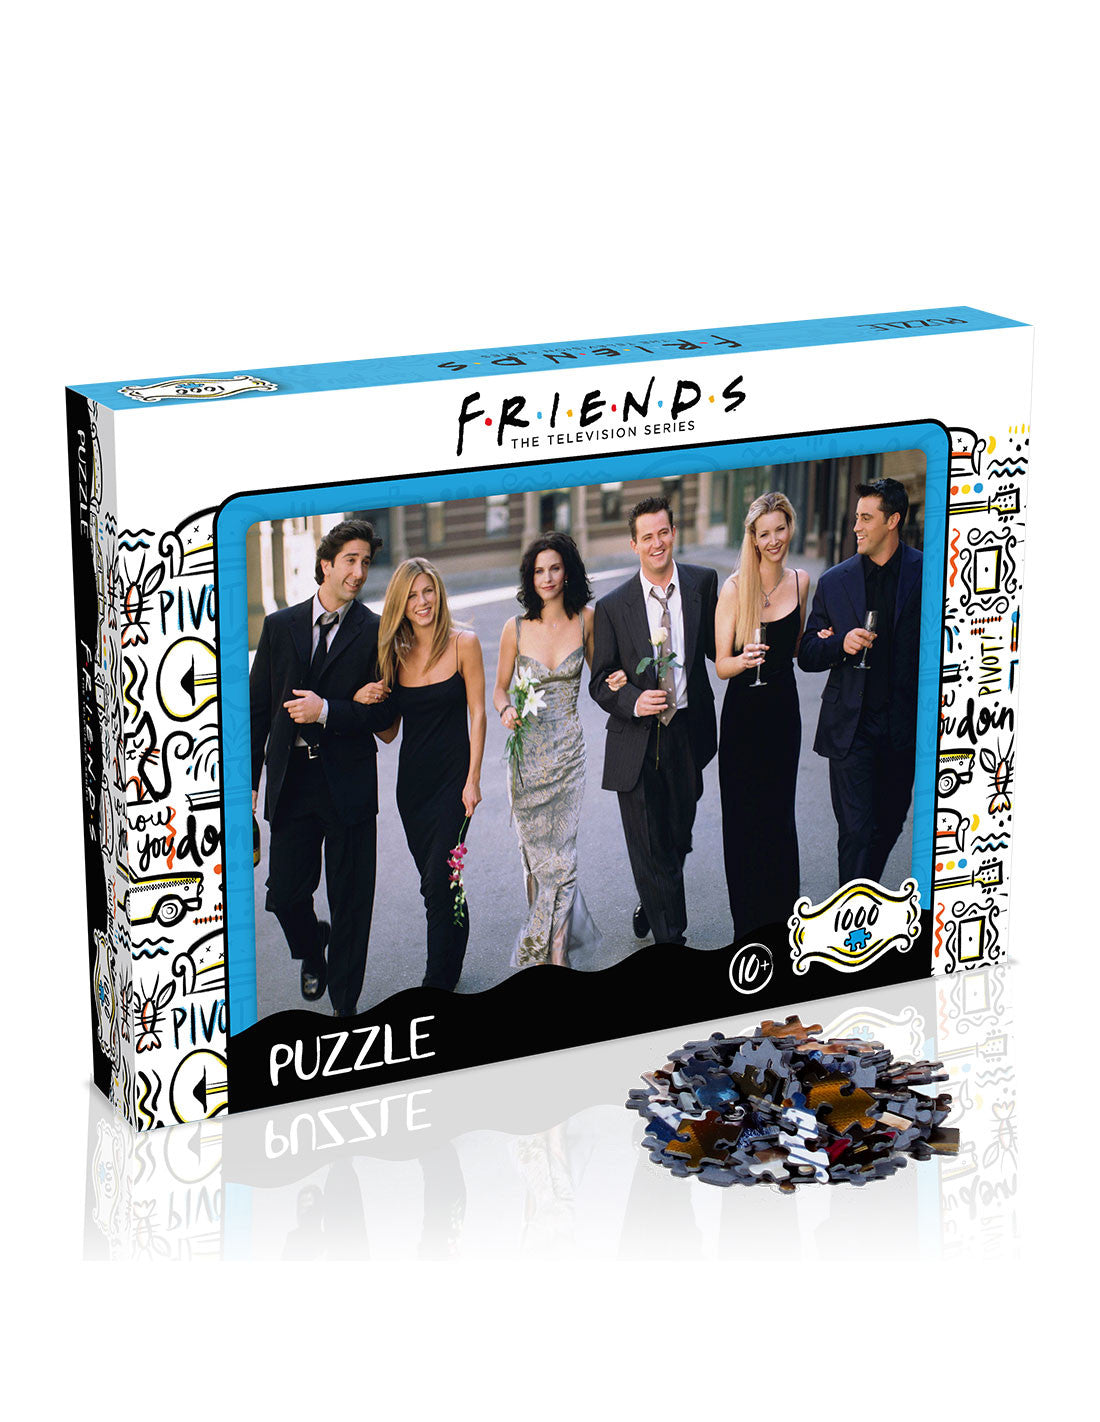 Puzzle FRIENDS - Wedding - 1000 pieces